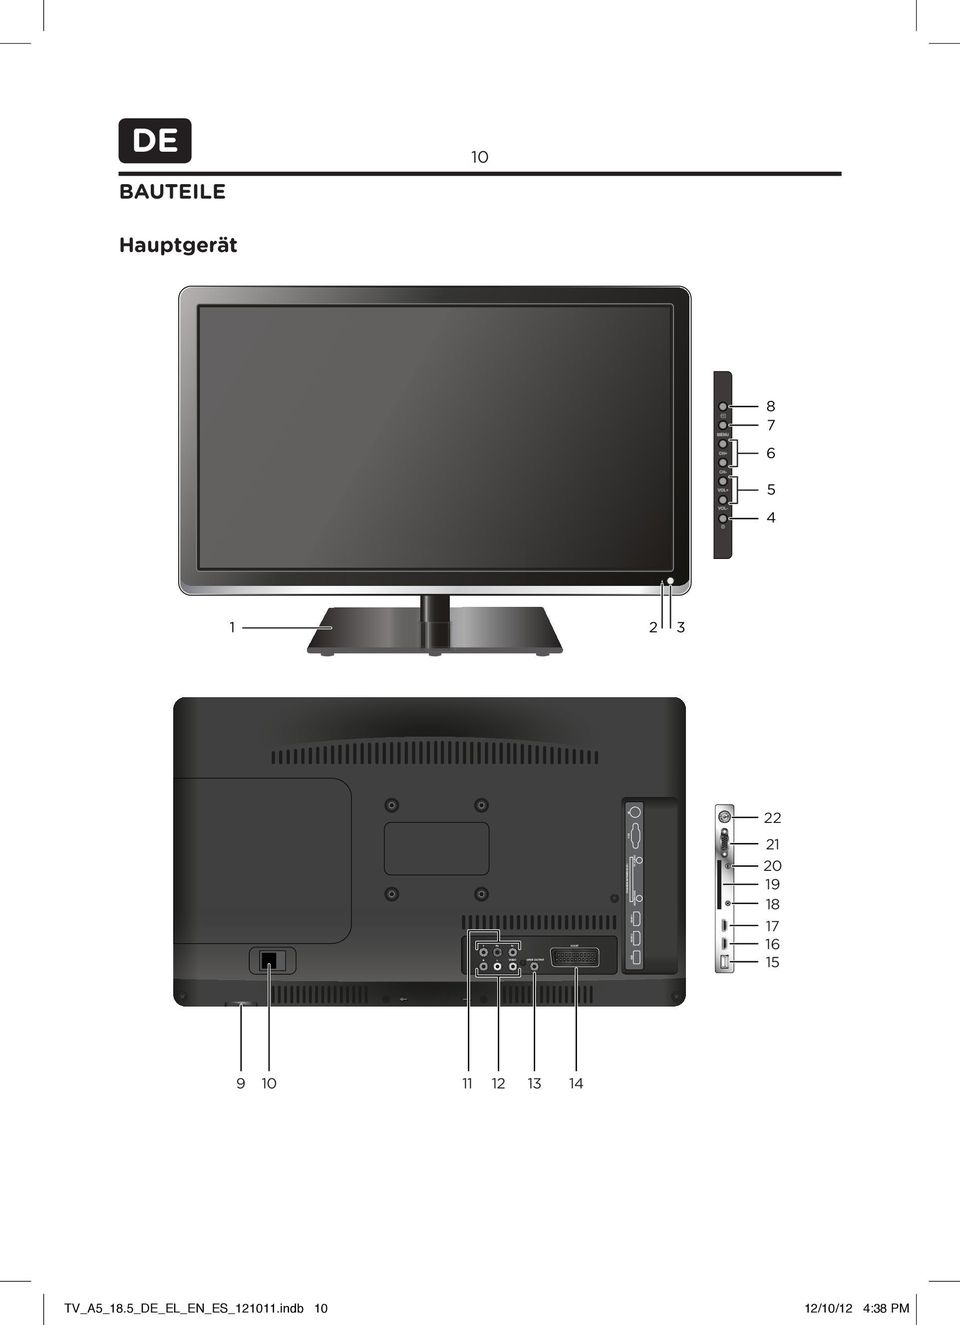 (CI) VGA USB HDMI 2 HDMI HEADPHONE PC AUDIO 2 20 9 8 7